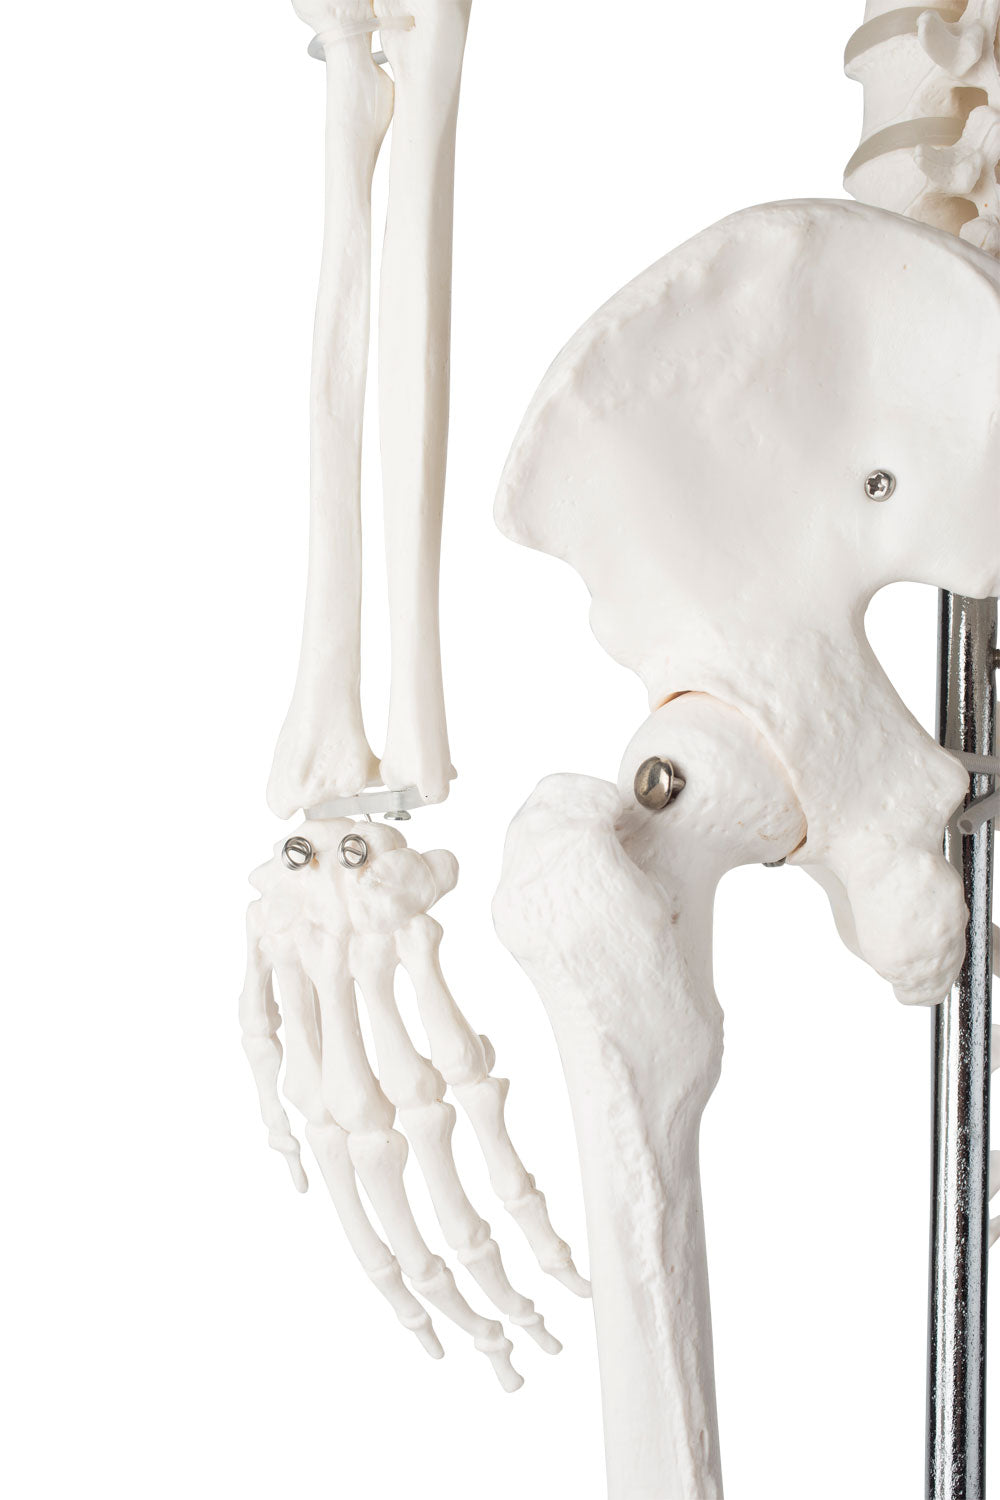 Skeletmodel på 85 cm med høj detaljegrad